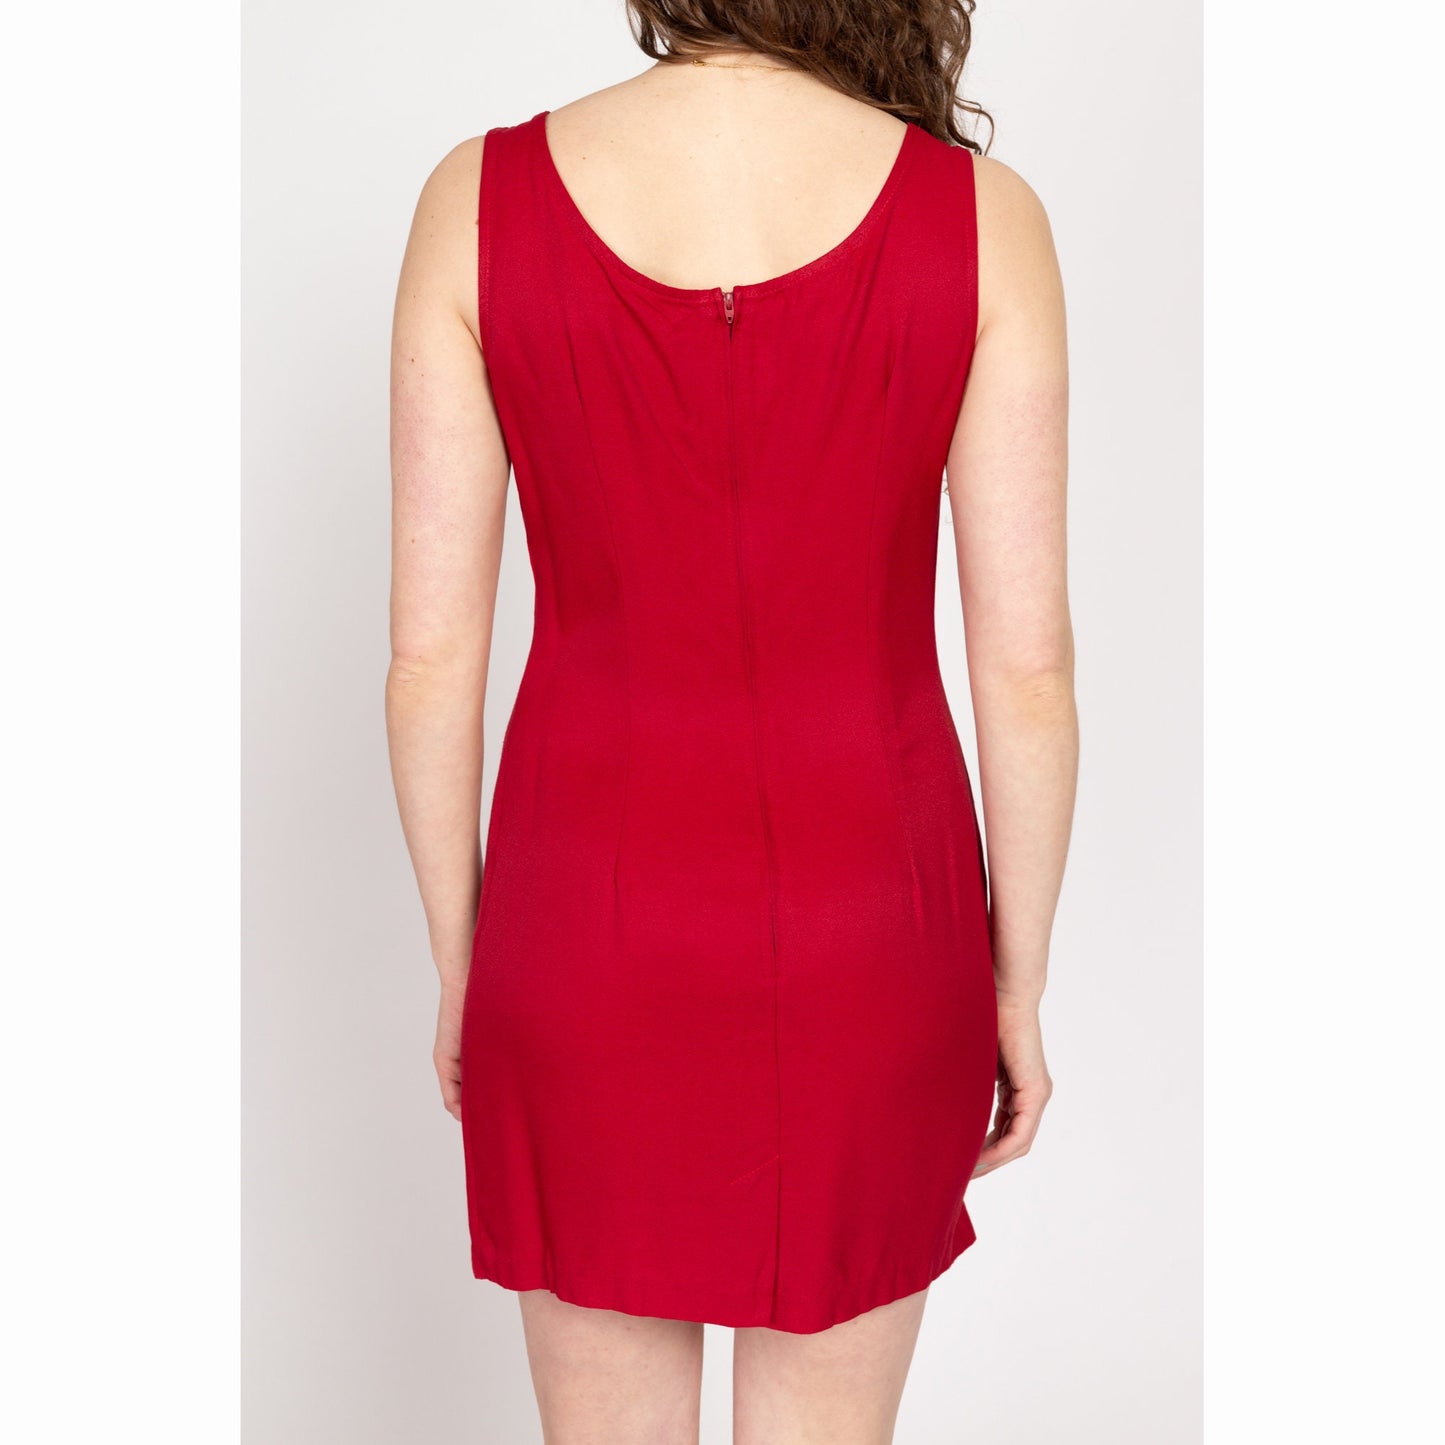 Medium 90s Red Mini Sheath Dress | Vintage Fitted Scoop Neck Sleeveless Minimalist Cocktail Dress